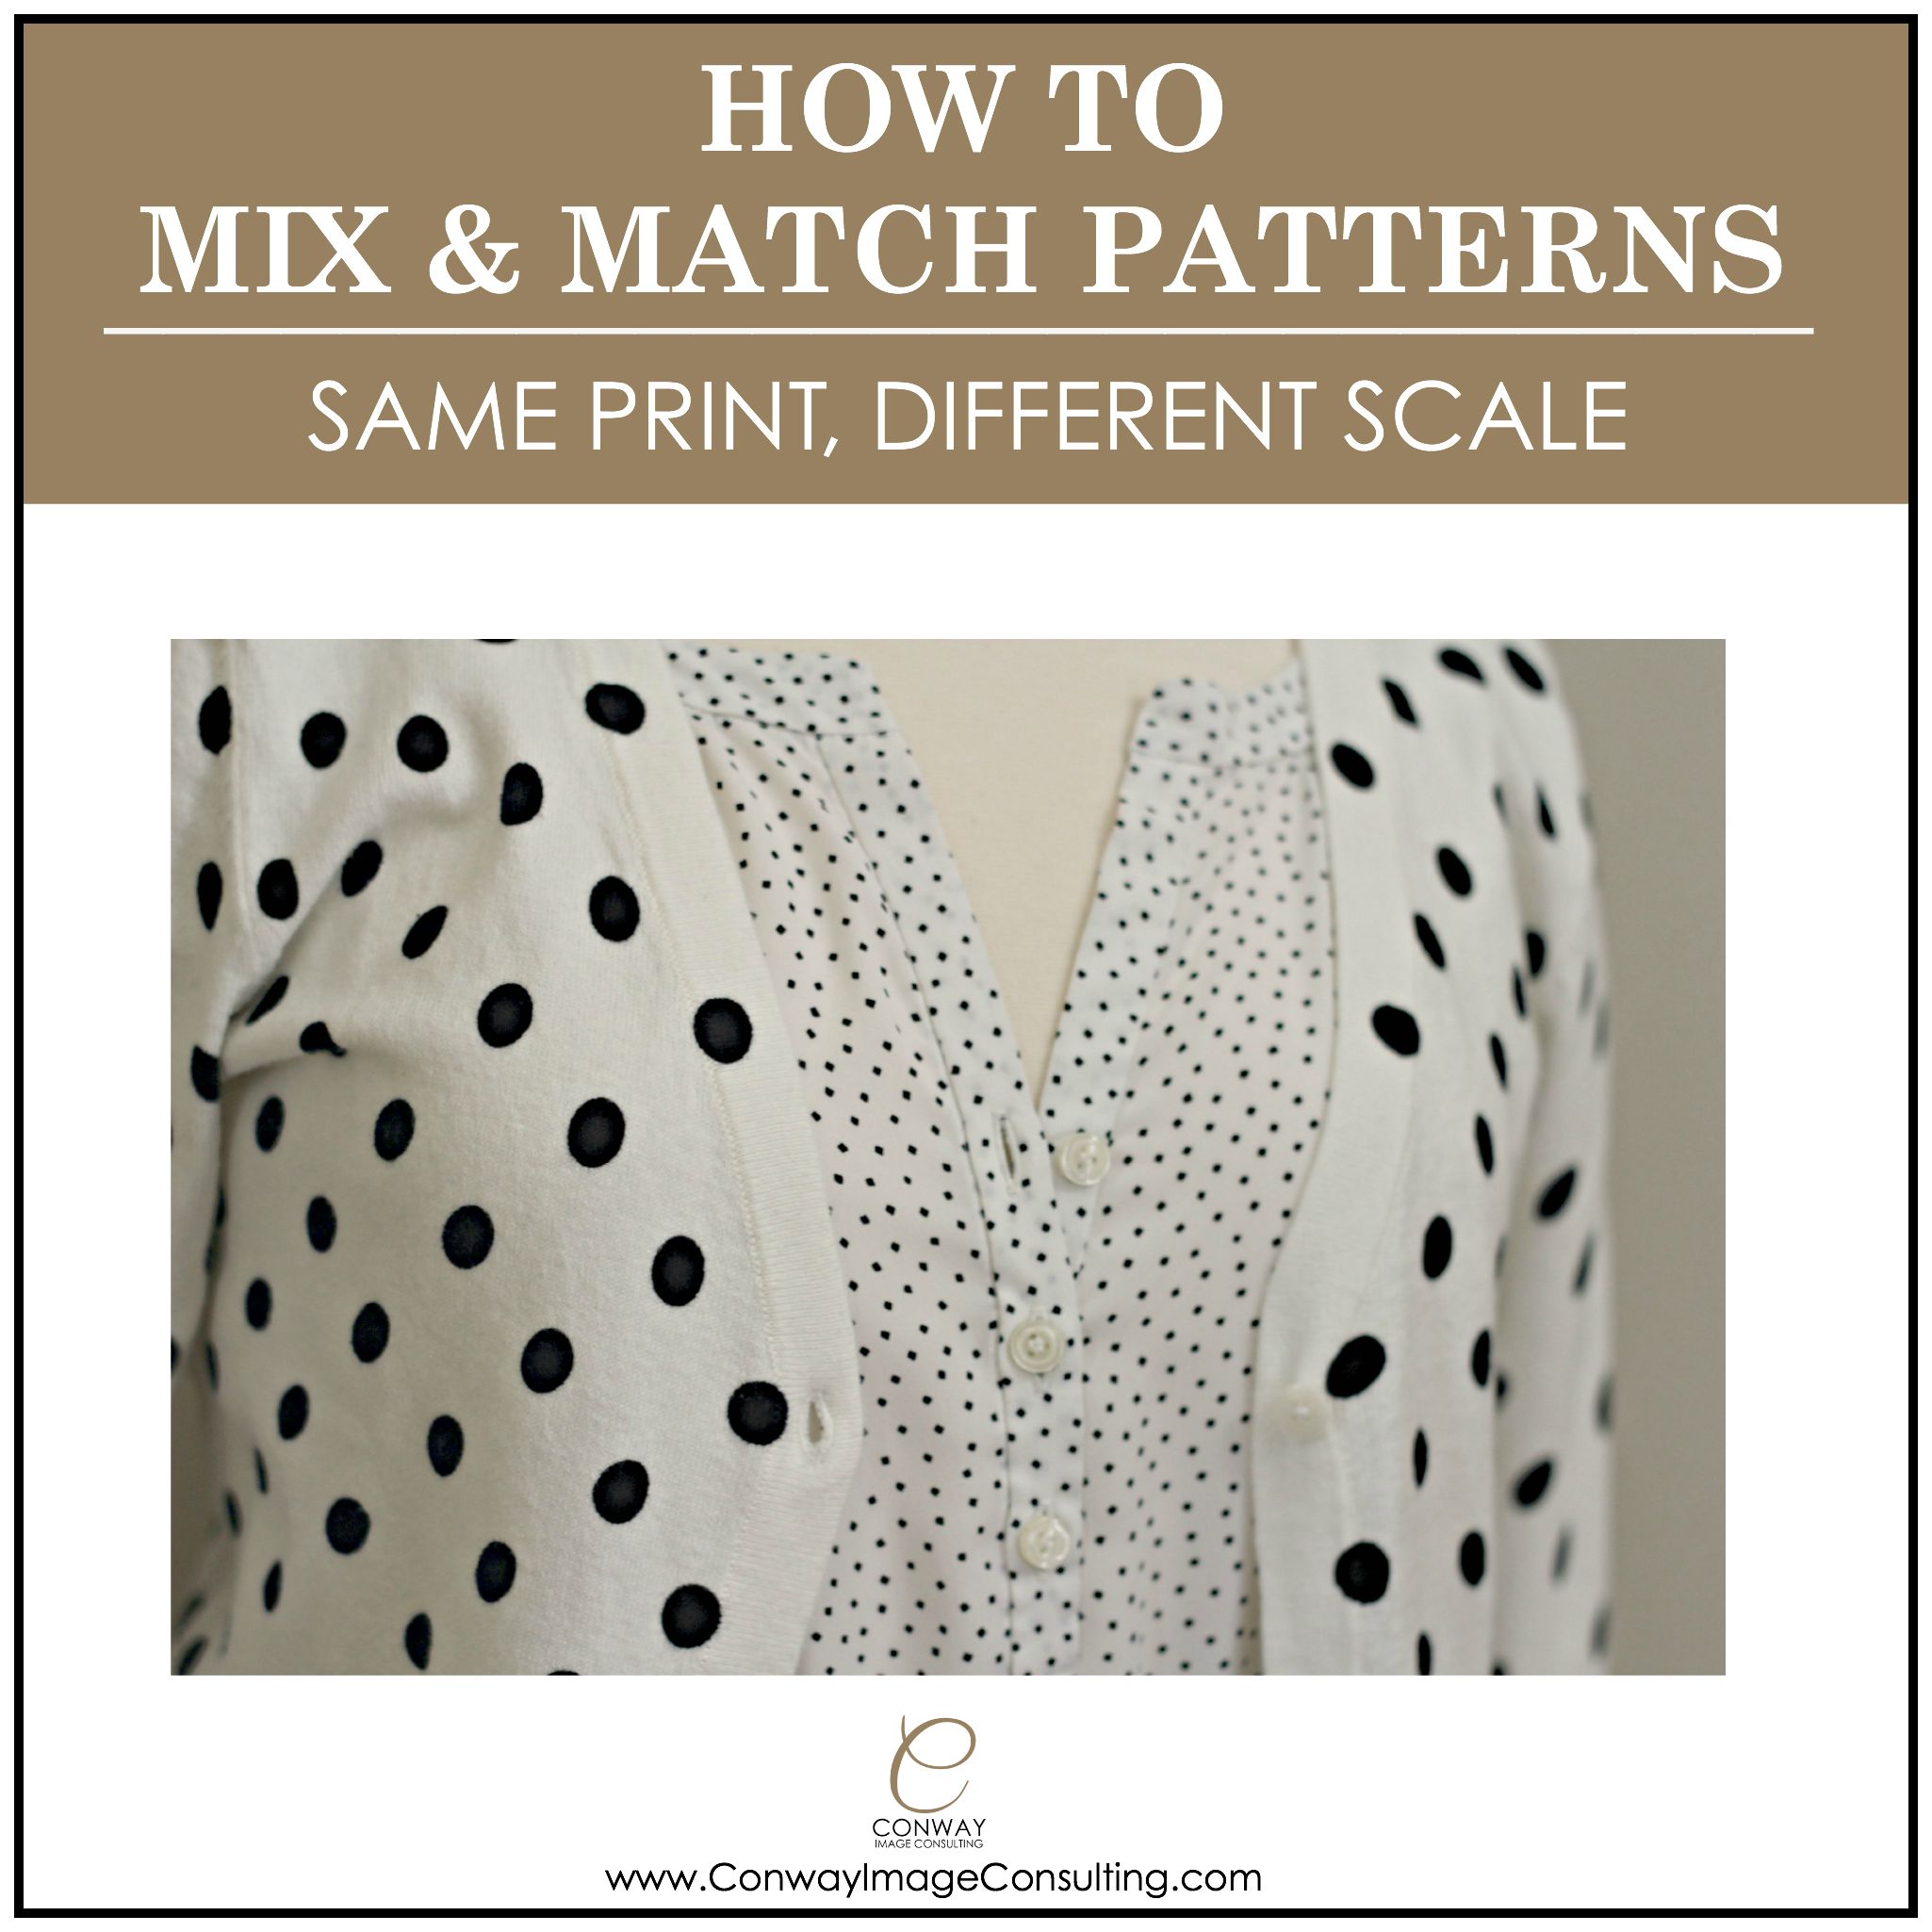 Mix & Match Patterns - Same Print, Different Scale